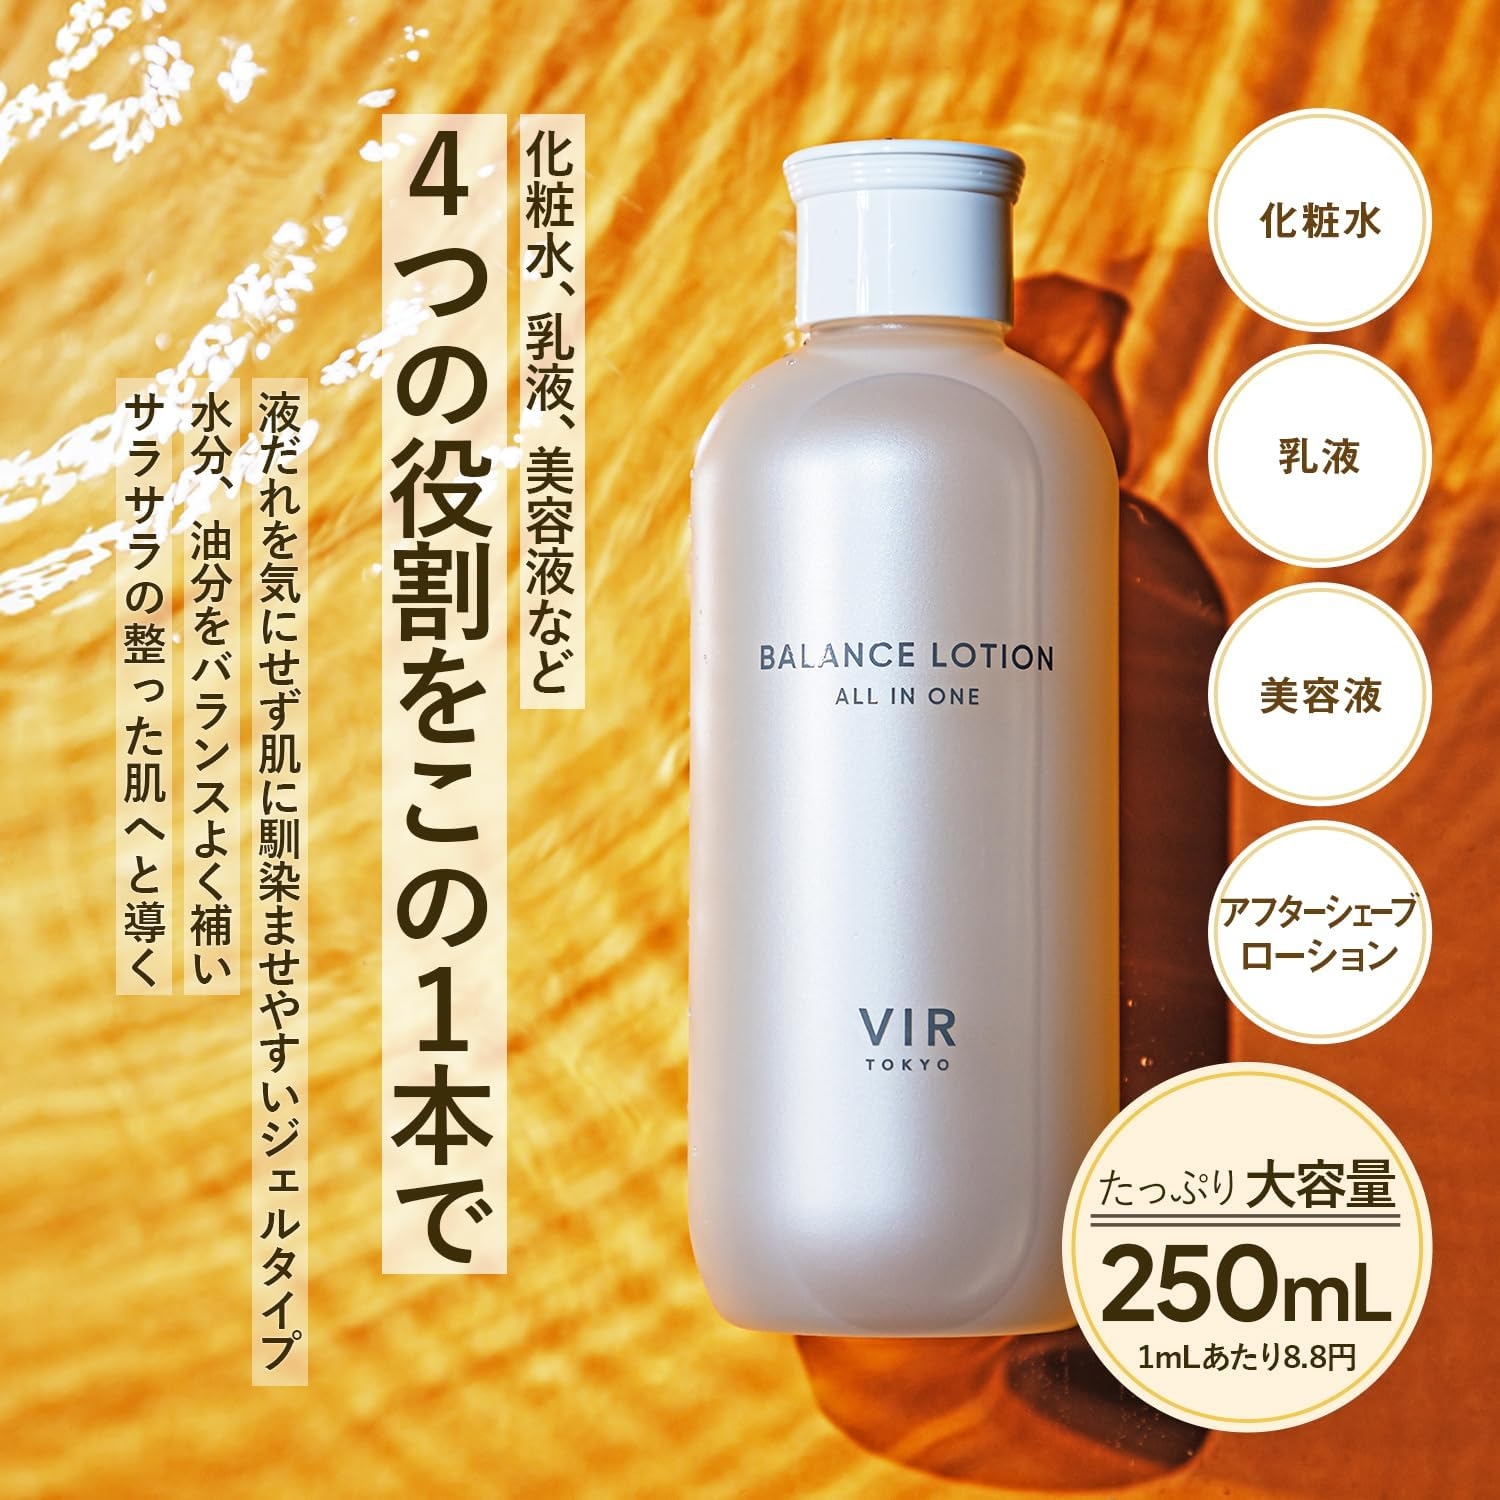 VIR TOKYO(ウィルトーキョー) バランスローションの商品画像4 